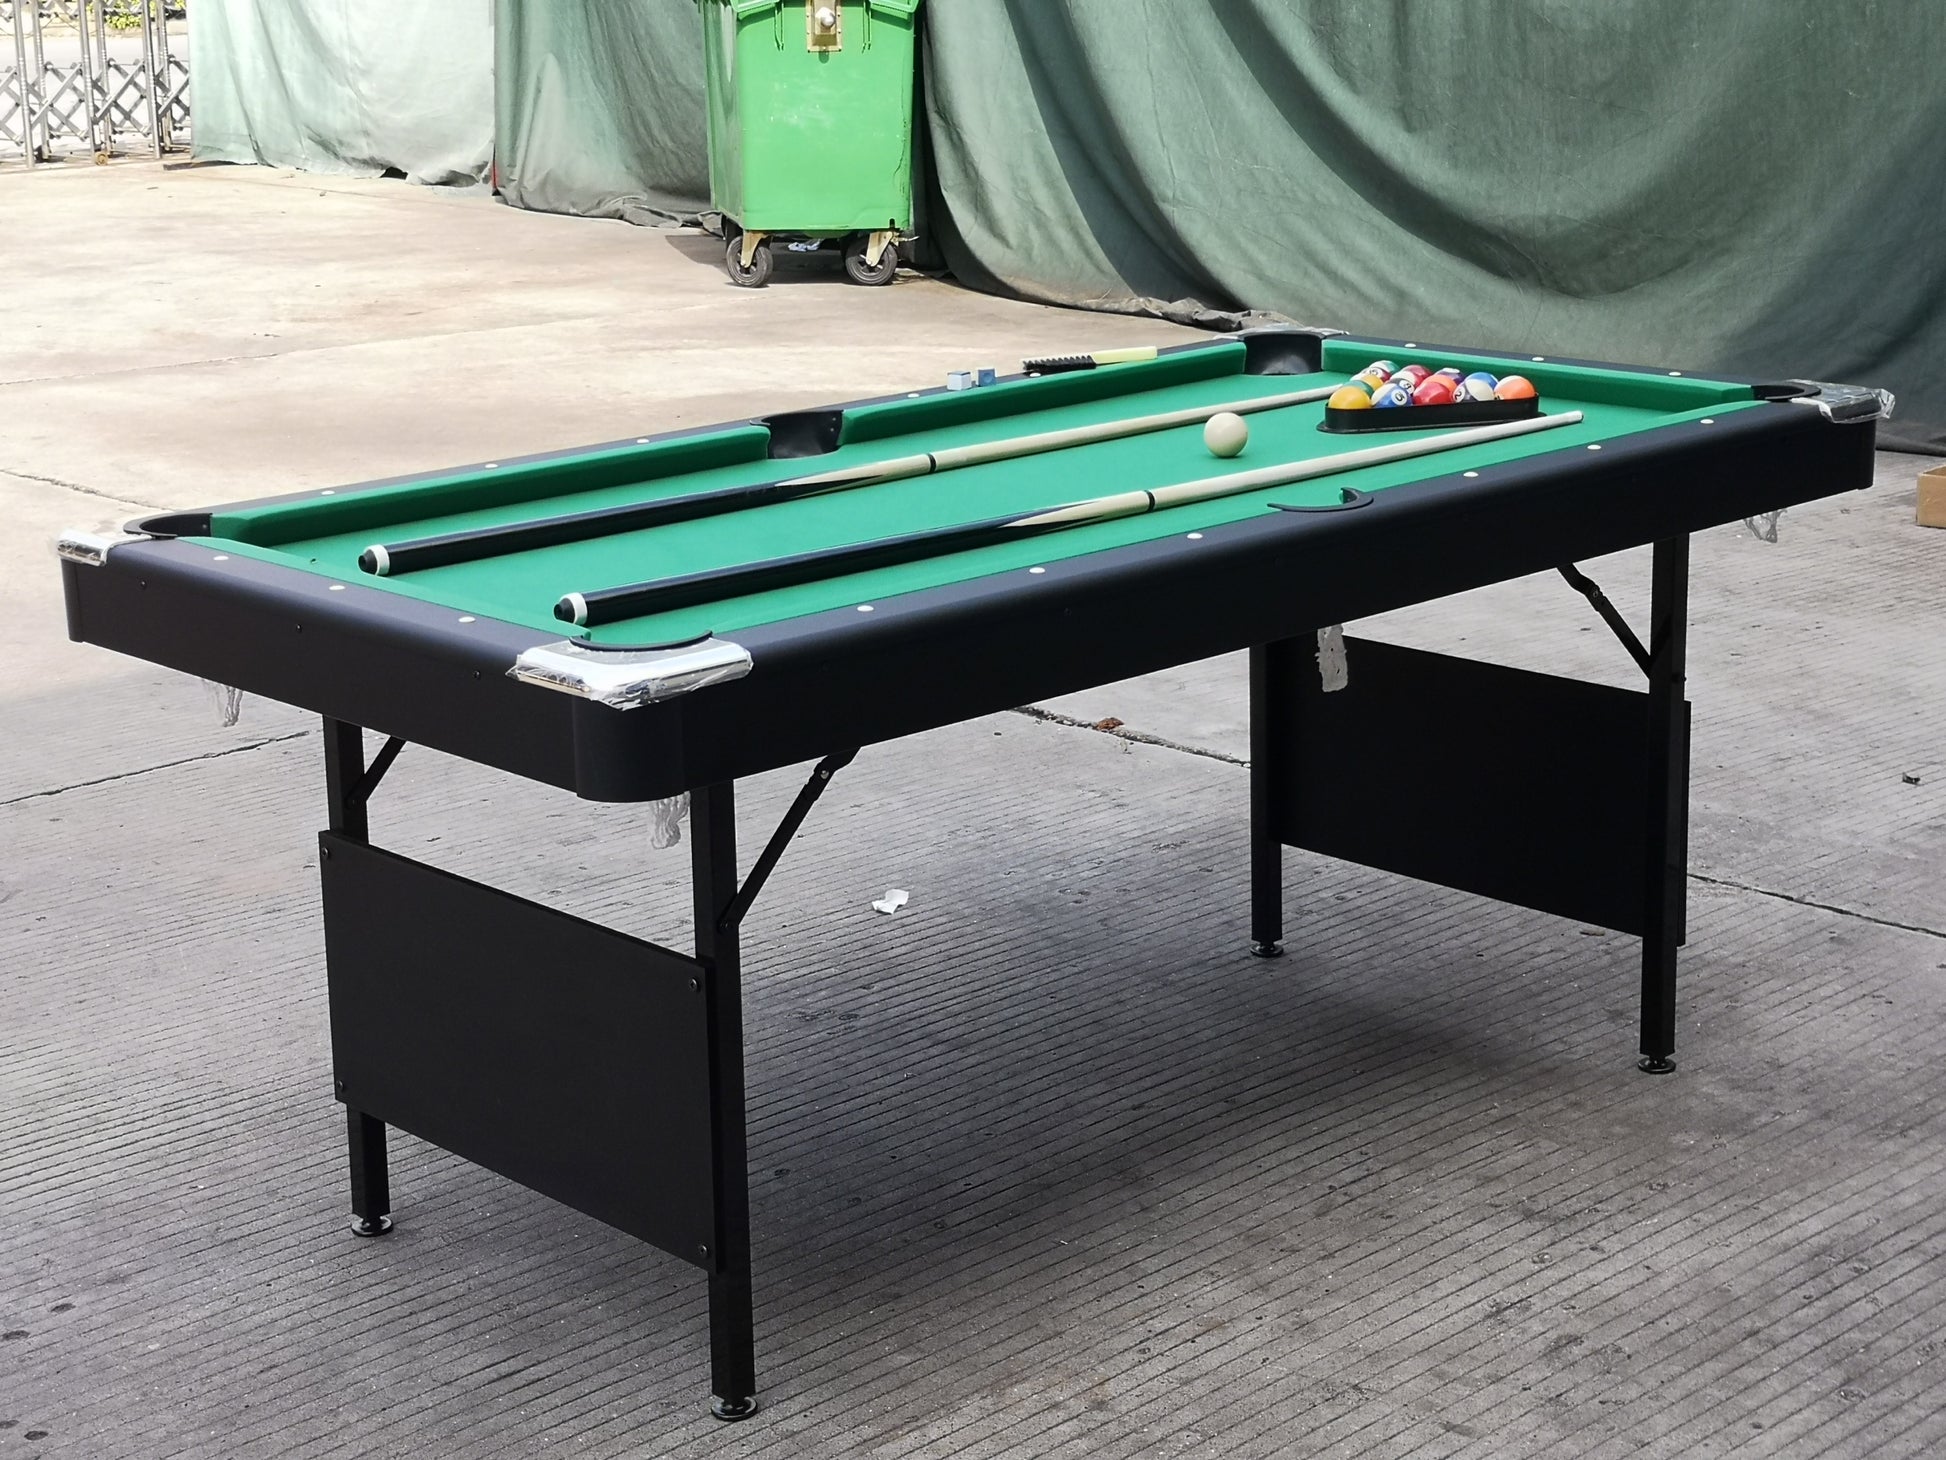 Pool Table,Billiard Table,Game Table,Indoor -